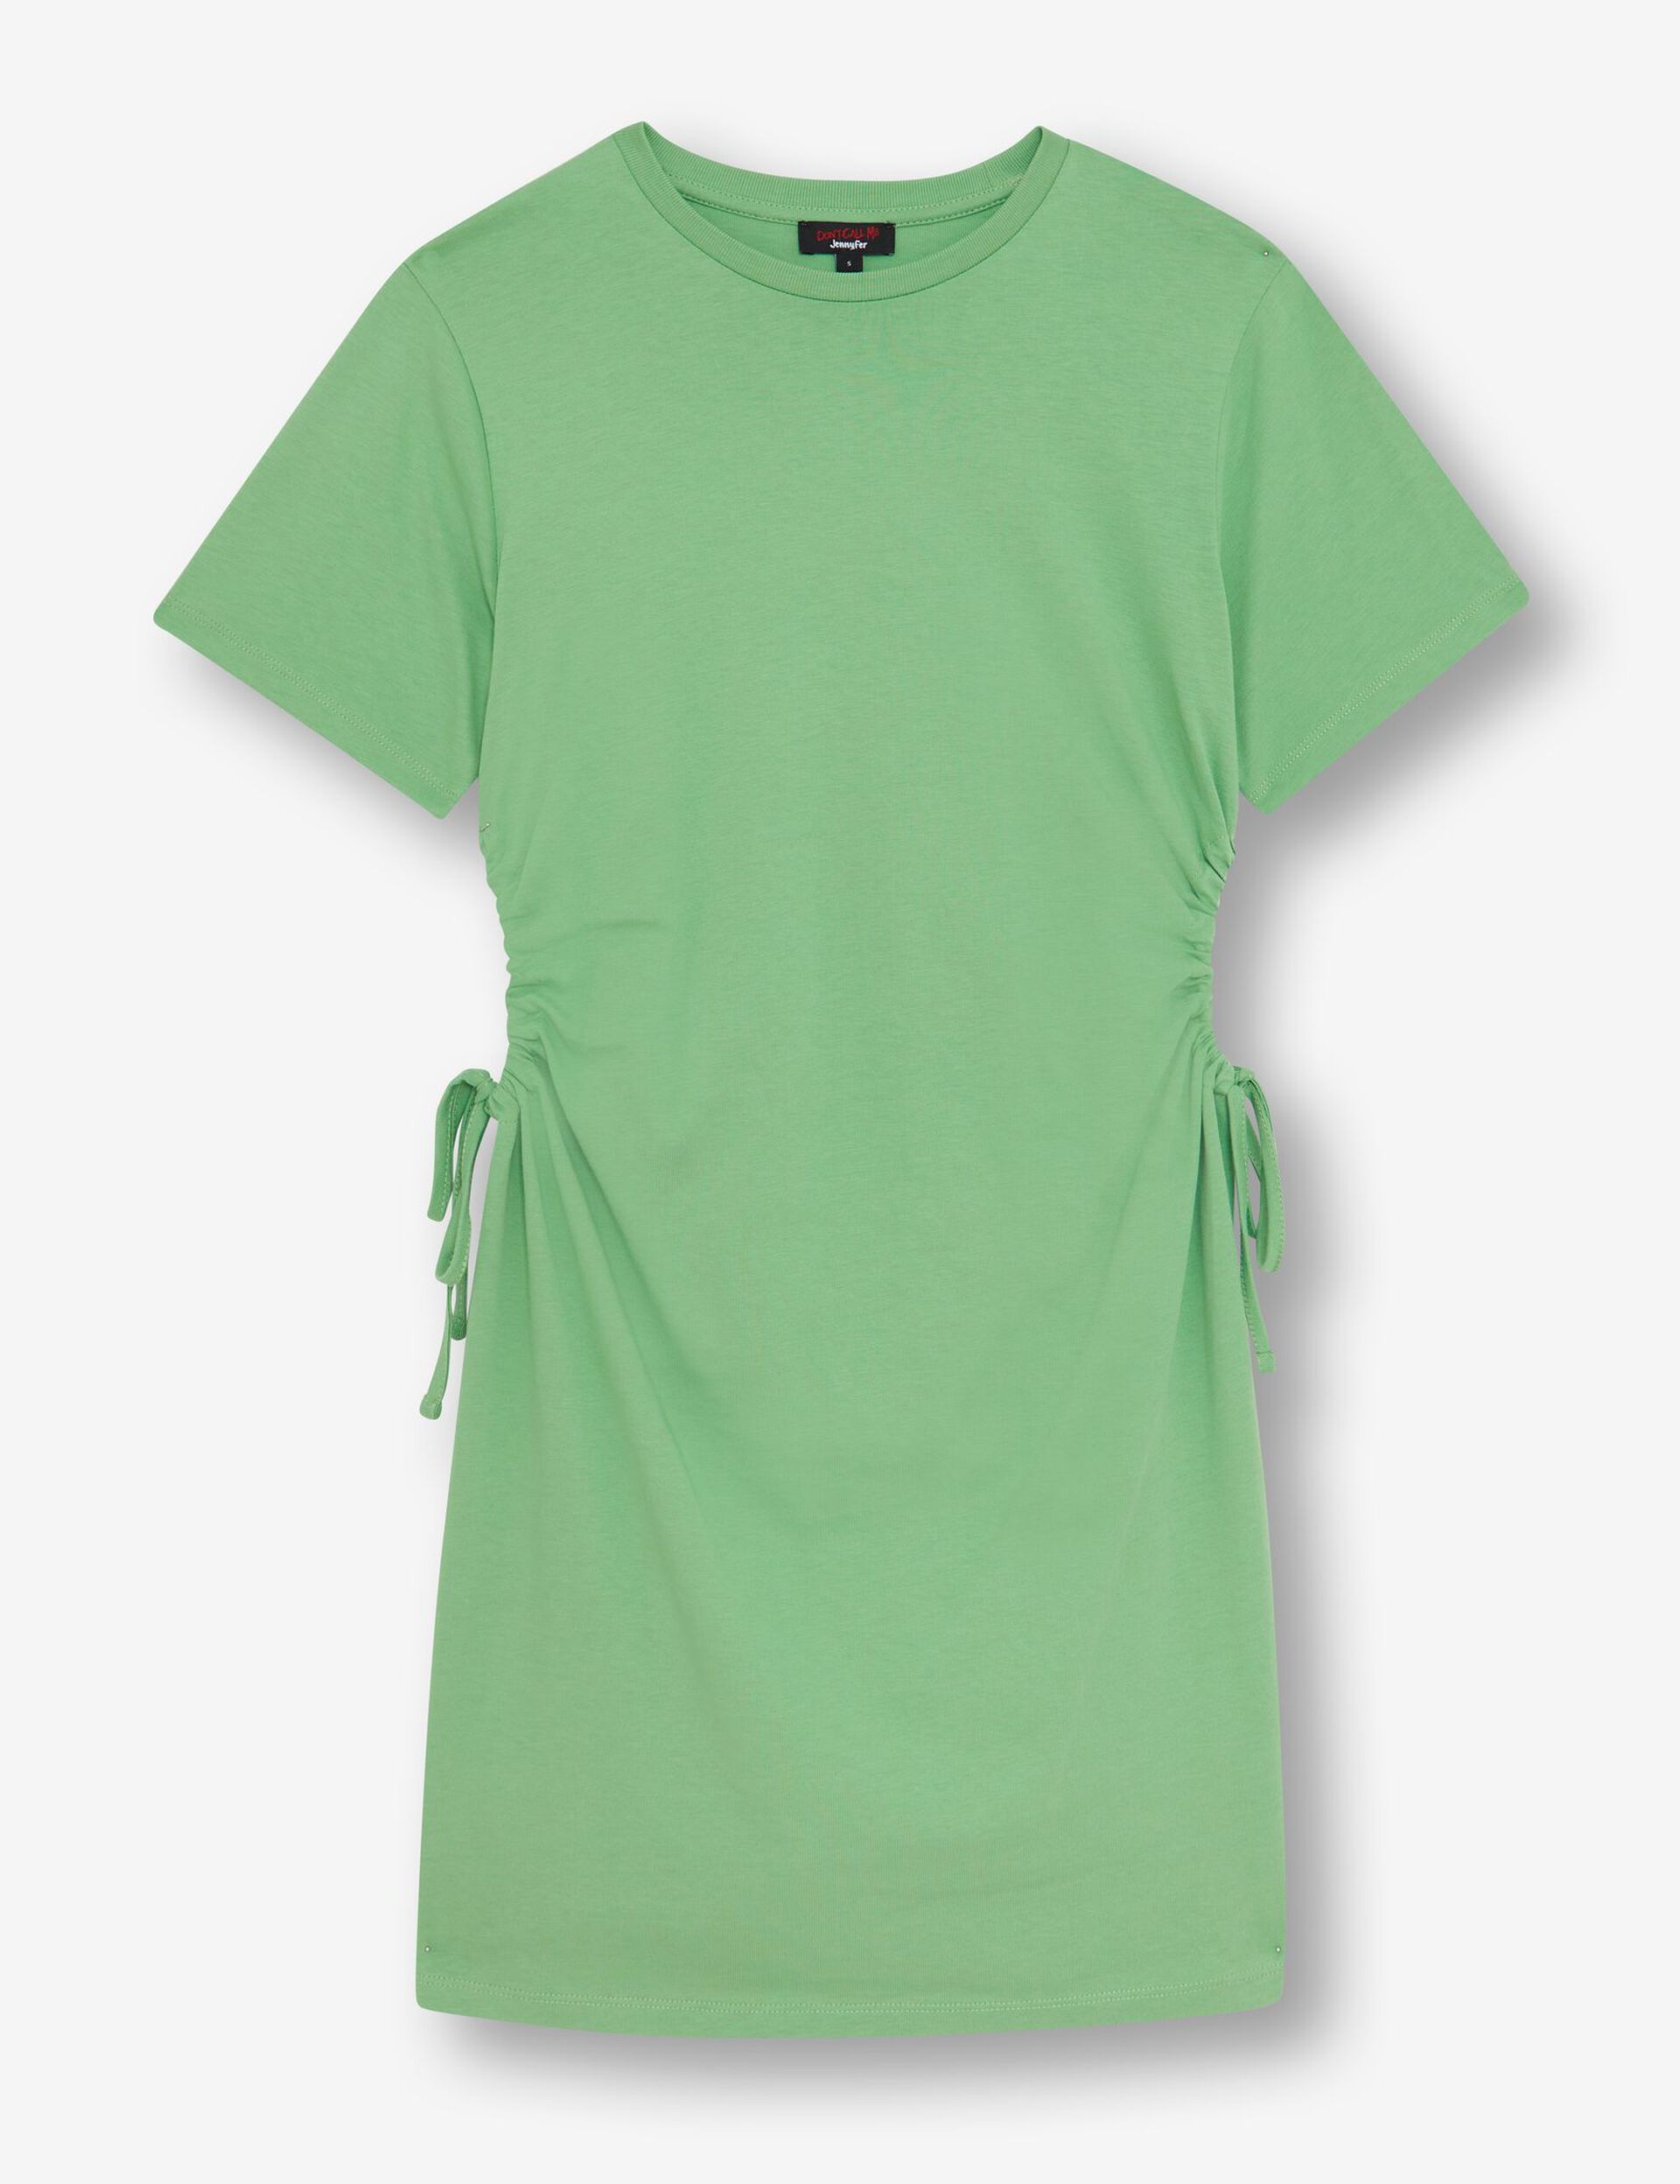 Robe tee-shirt verte à découpes